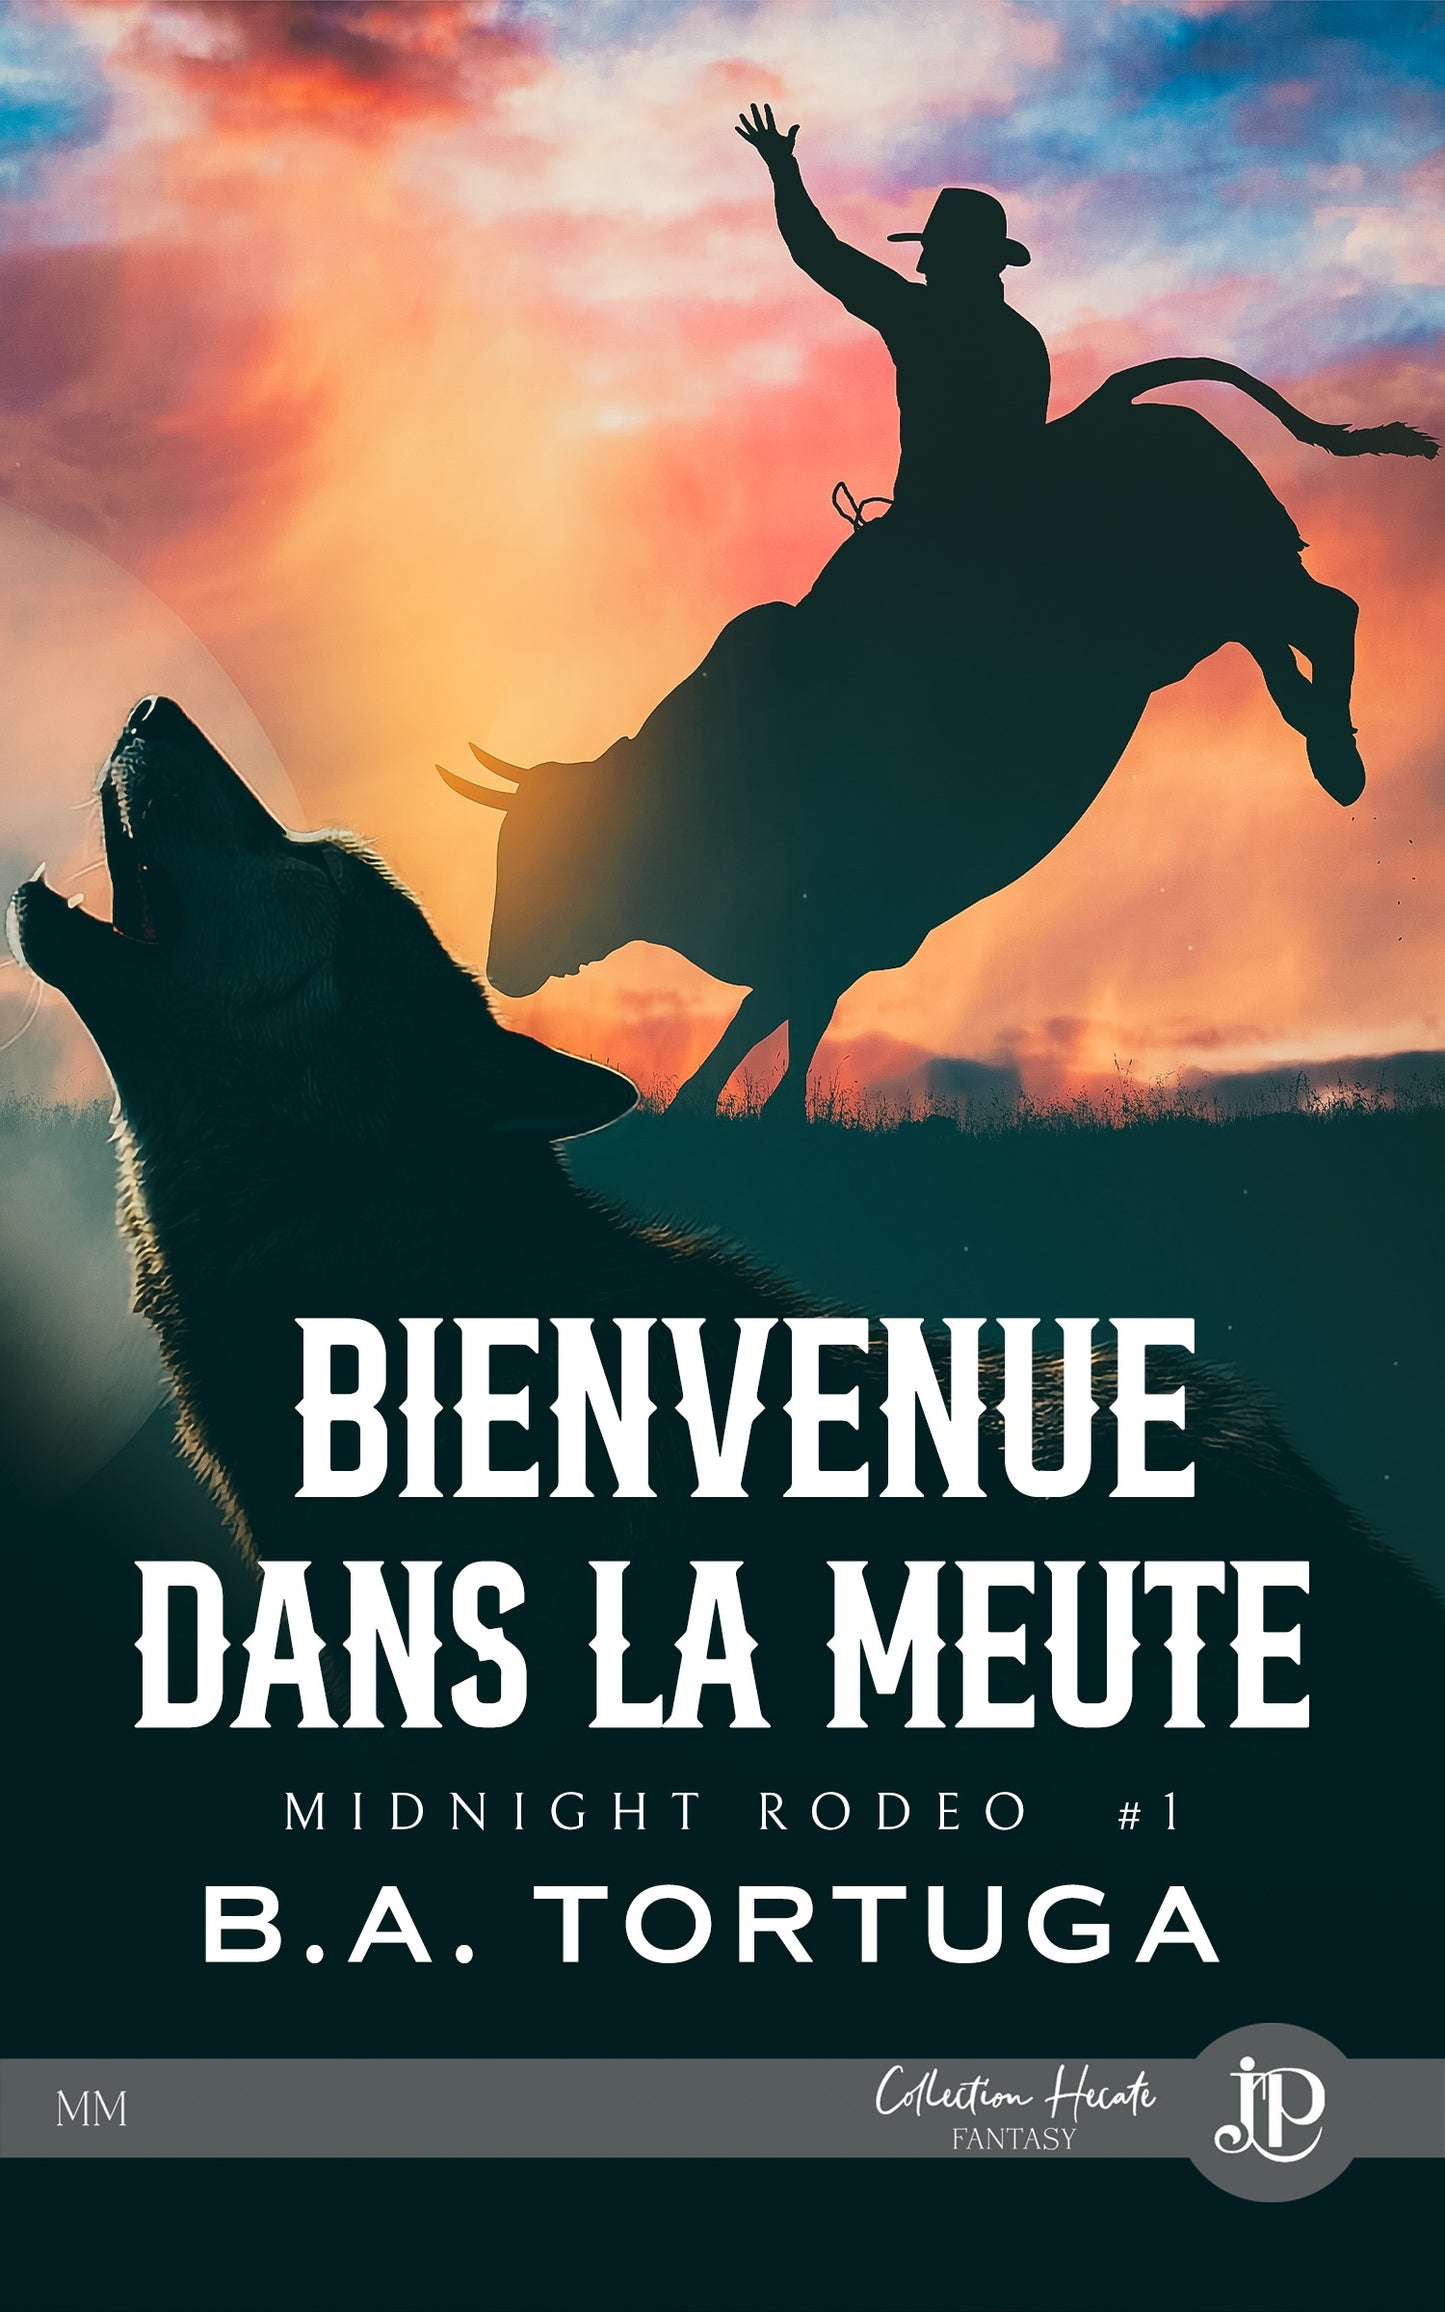 Midnight rodeo #1 : Bienvenue dans la meute